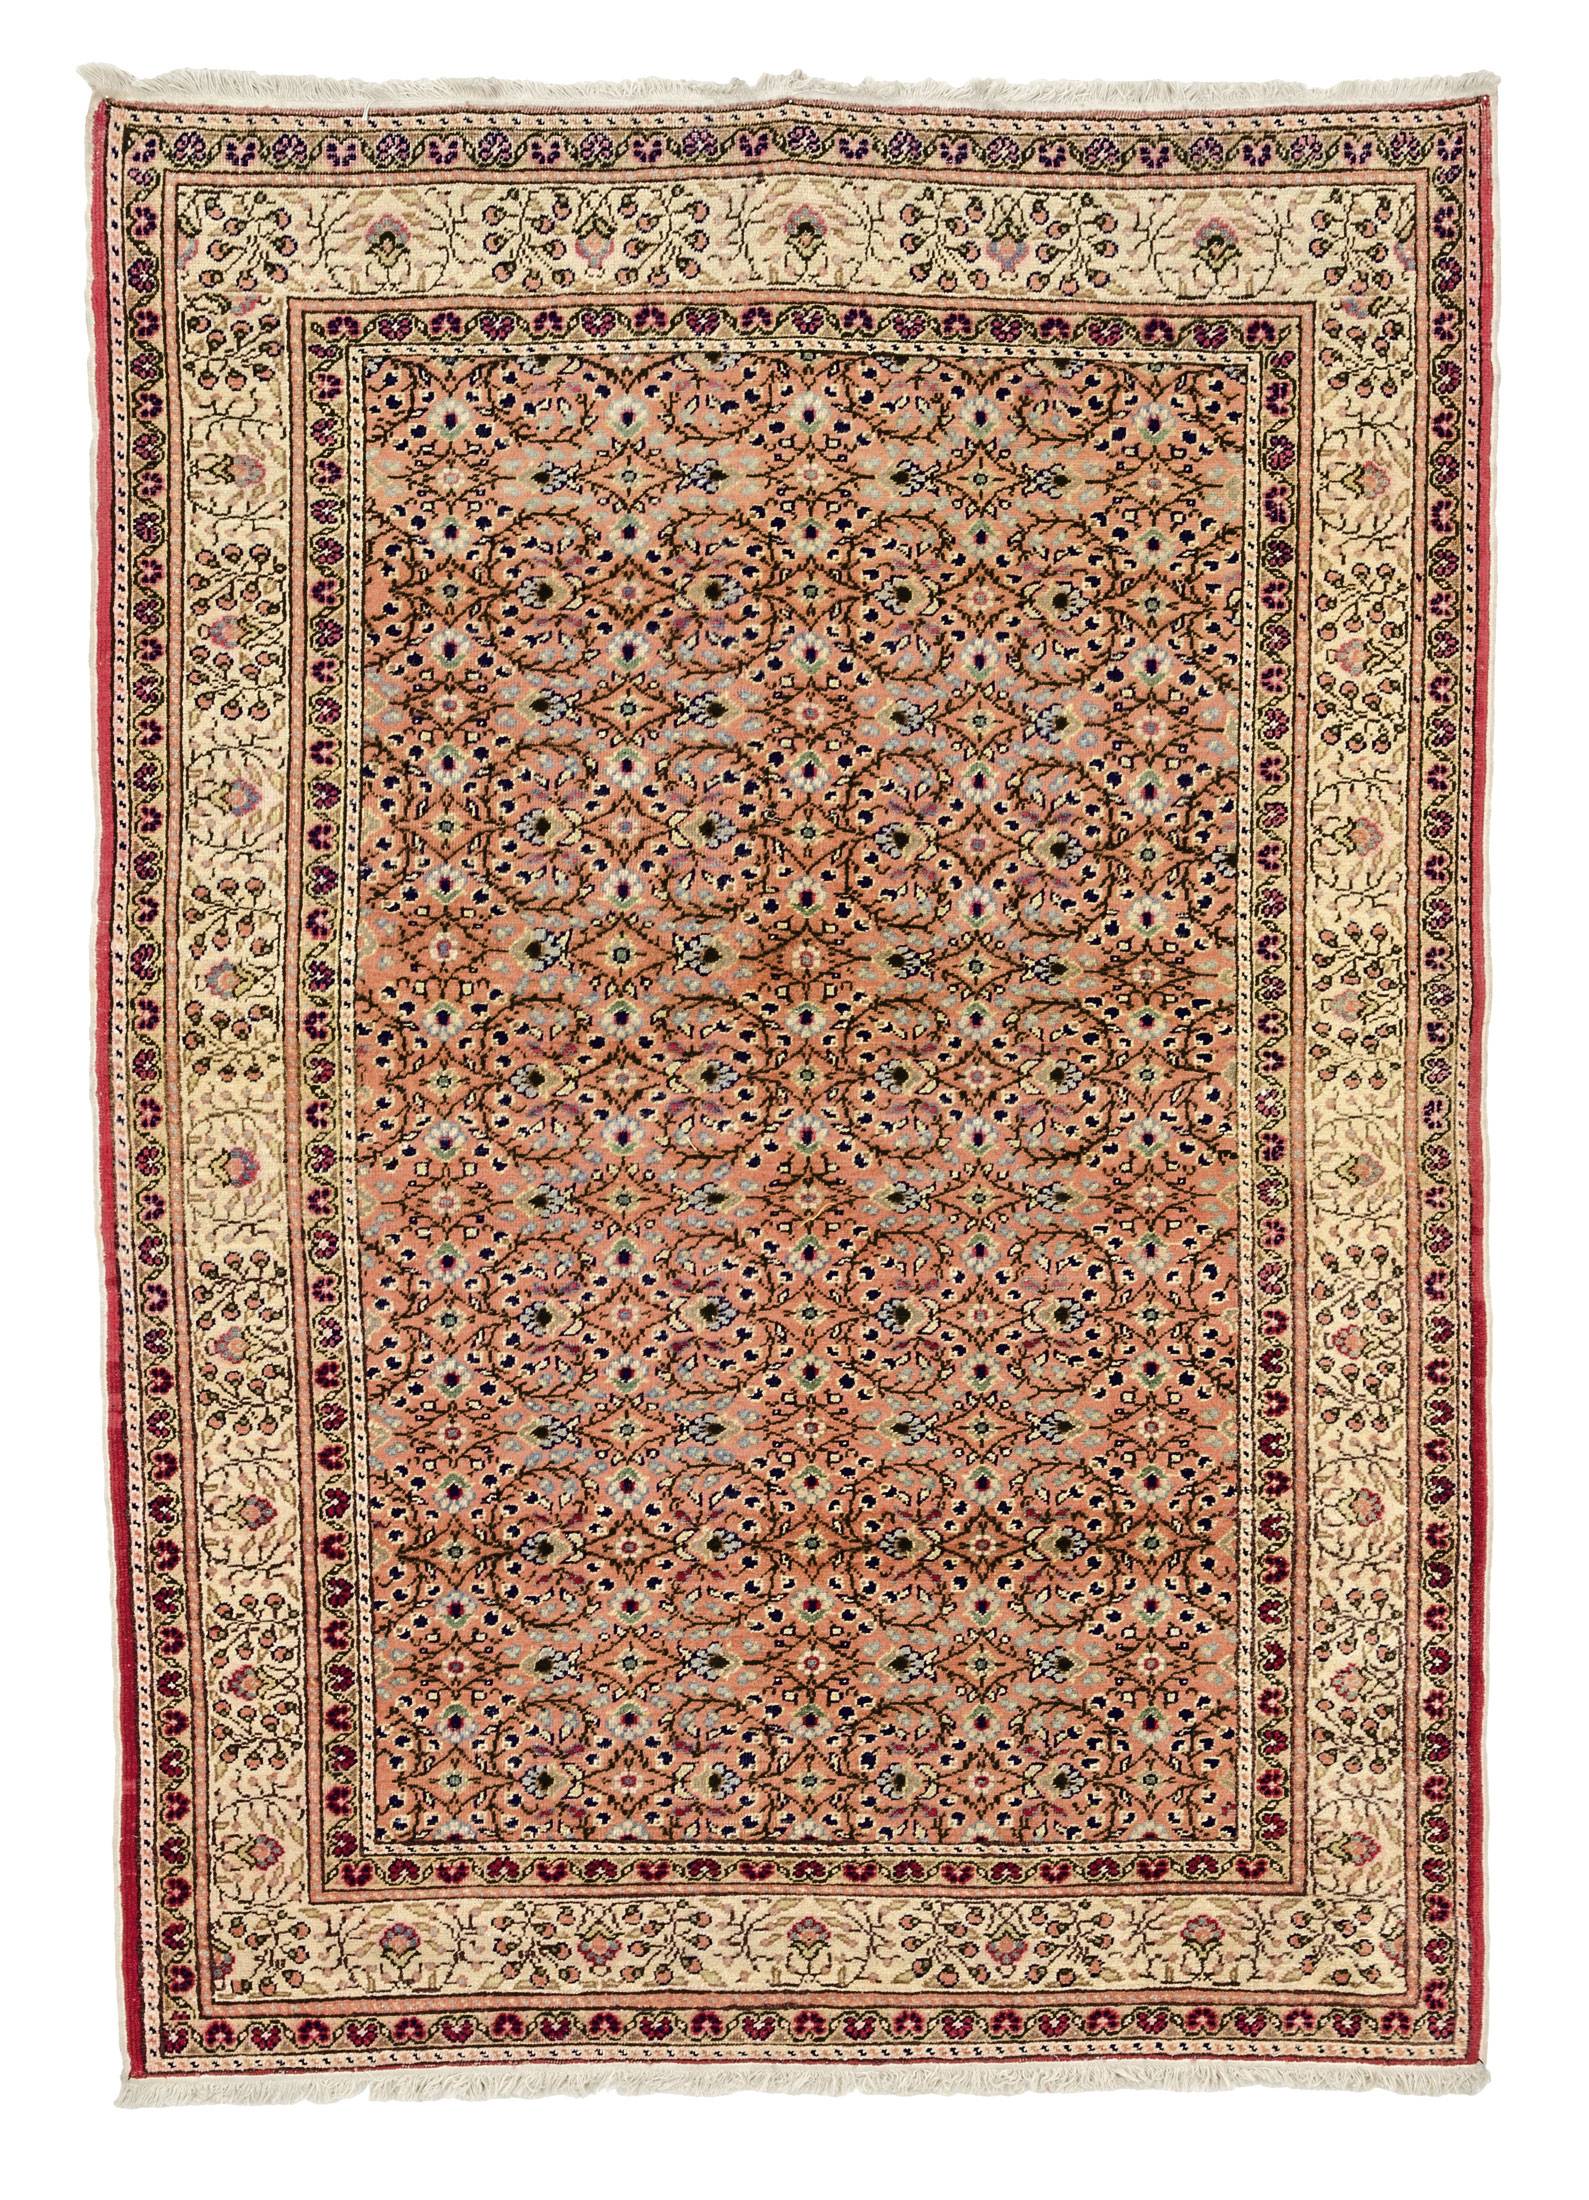 Anatolian-Kayseri-rug  second half of the 20th century, ghiordes-knot, 168*119 cm    Anatolisch-